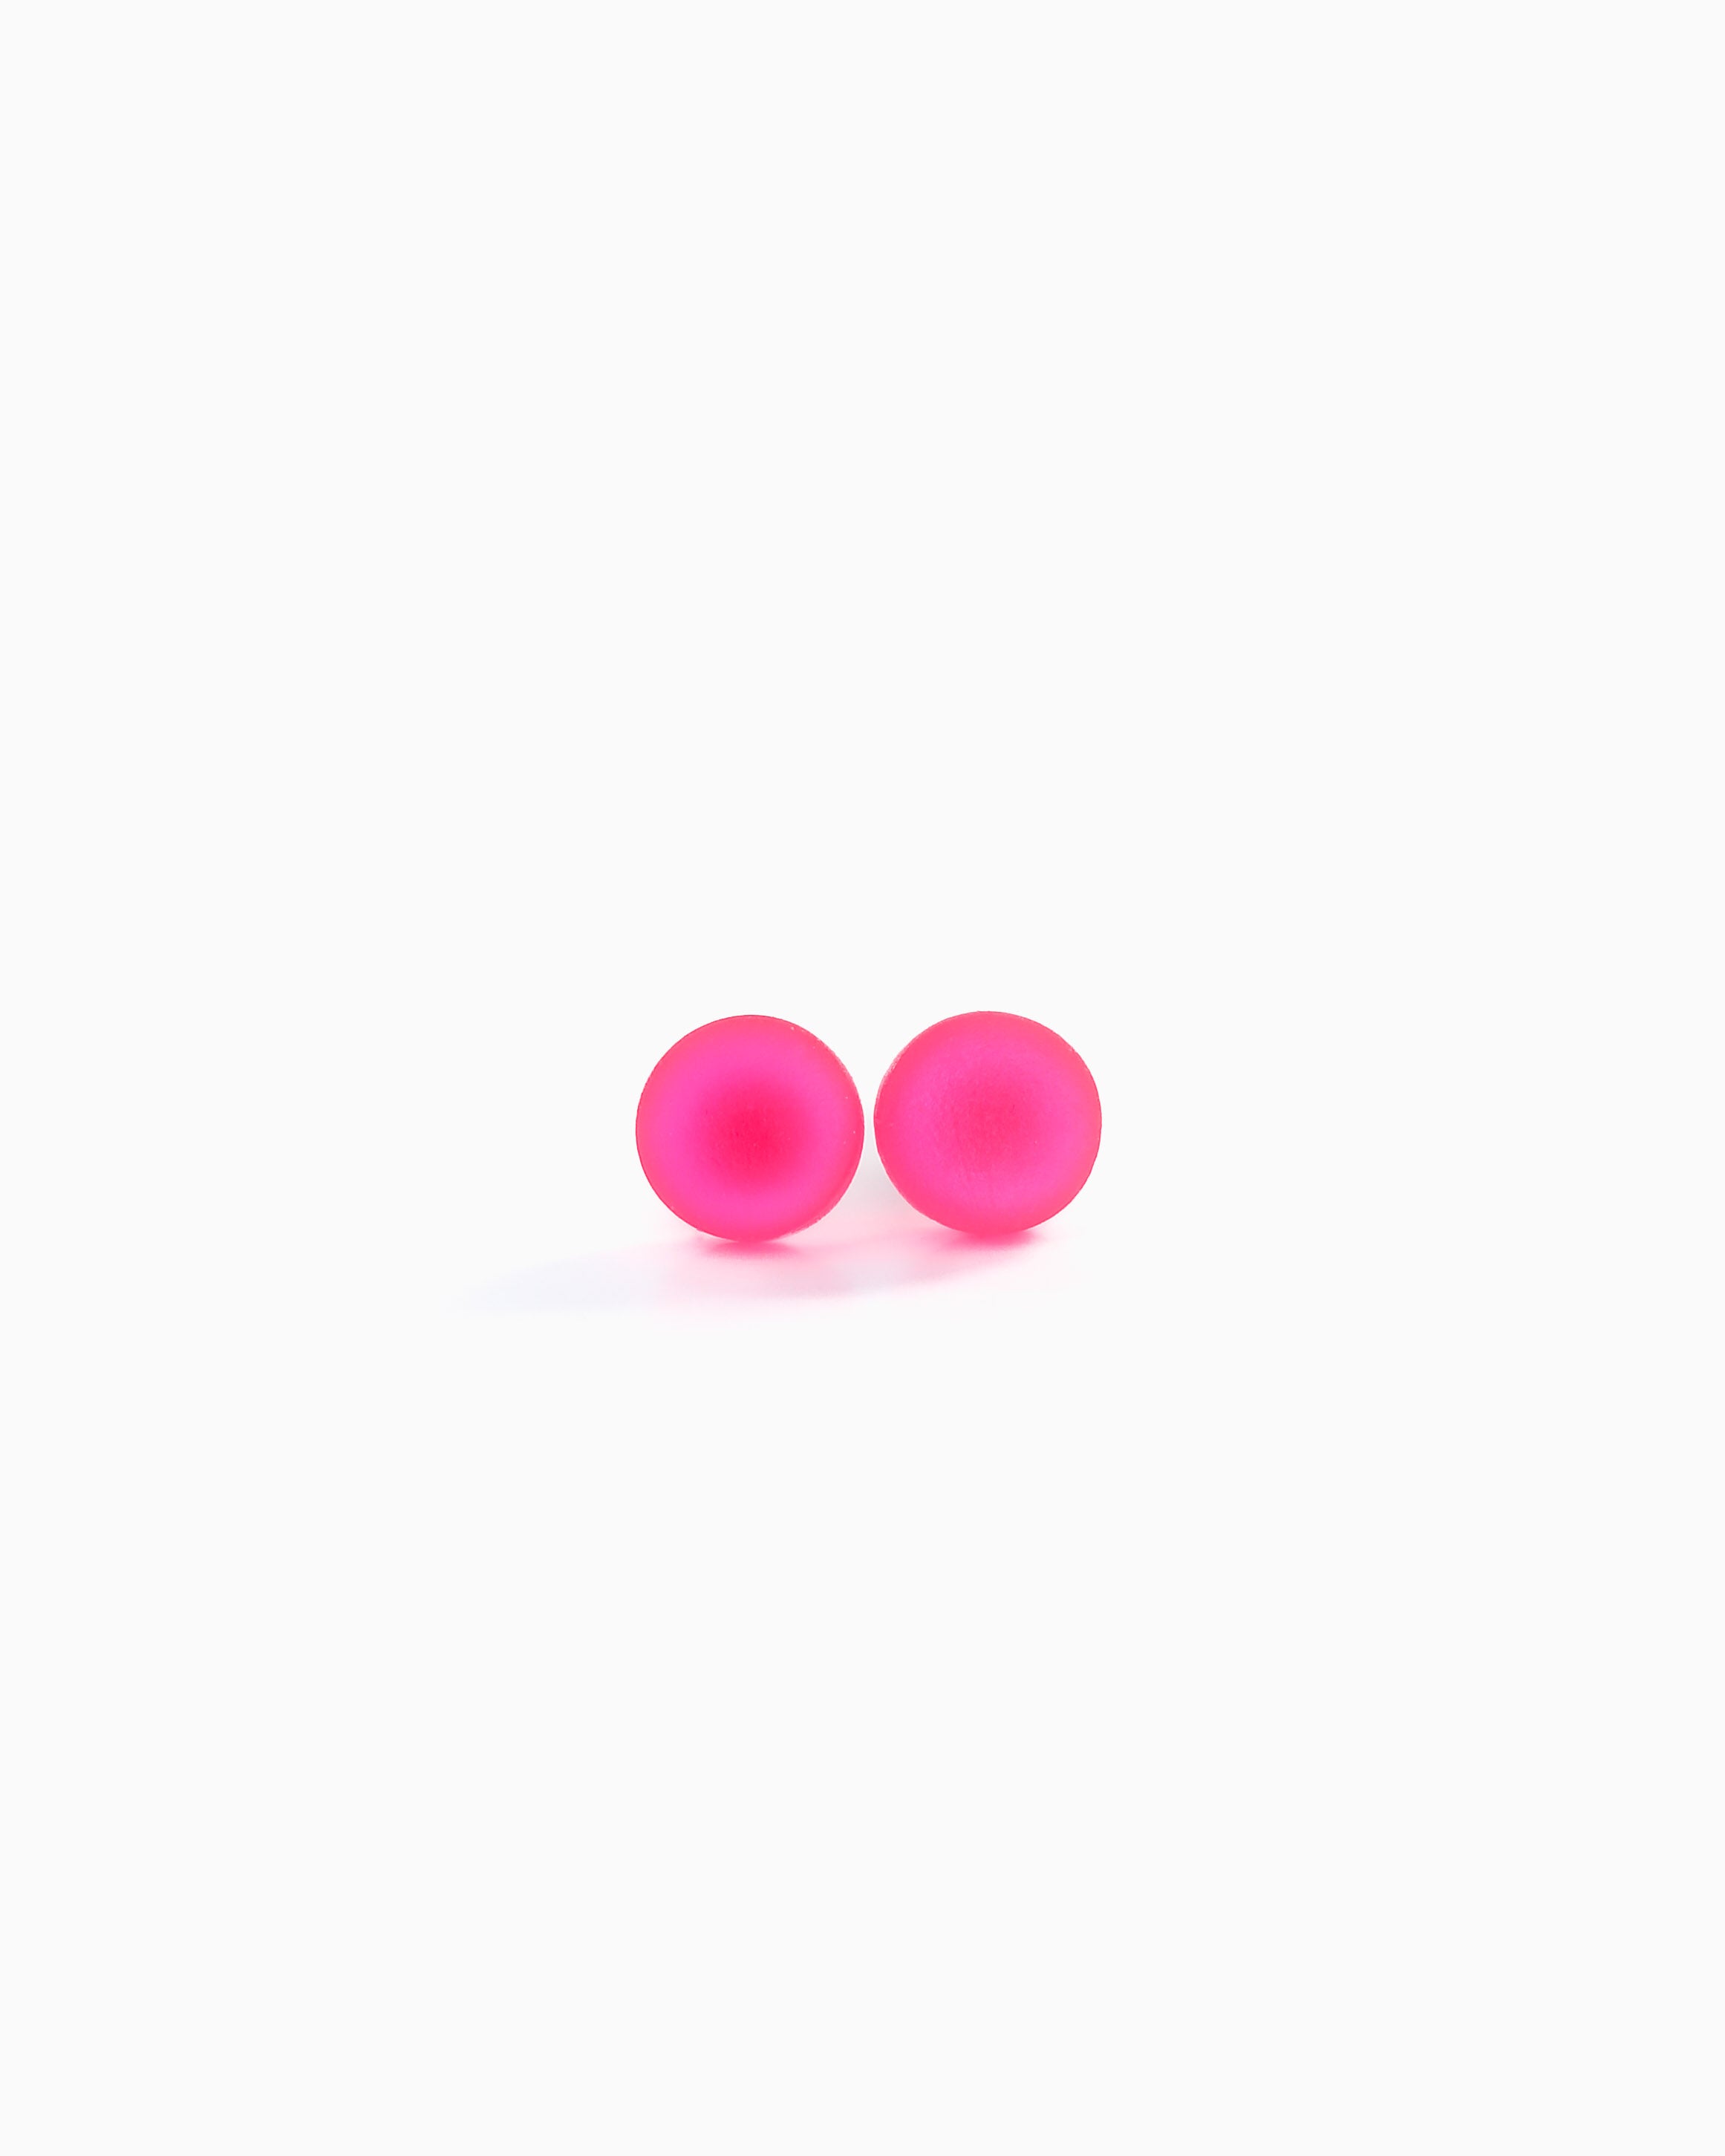 Neon pink tiny 8mm stud earrings, Hypoallergenic earrings for sensitive ears, Handmade jewelry